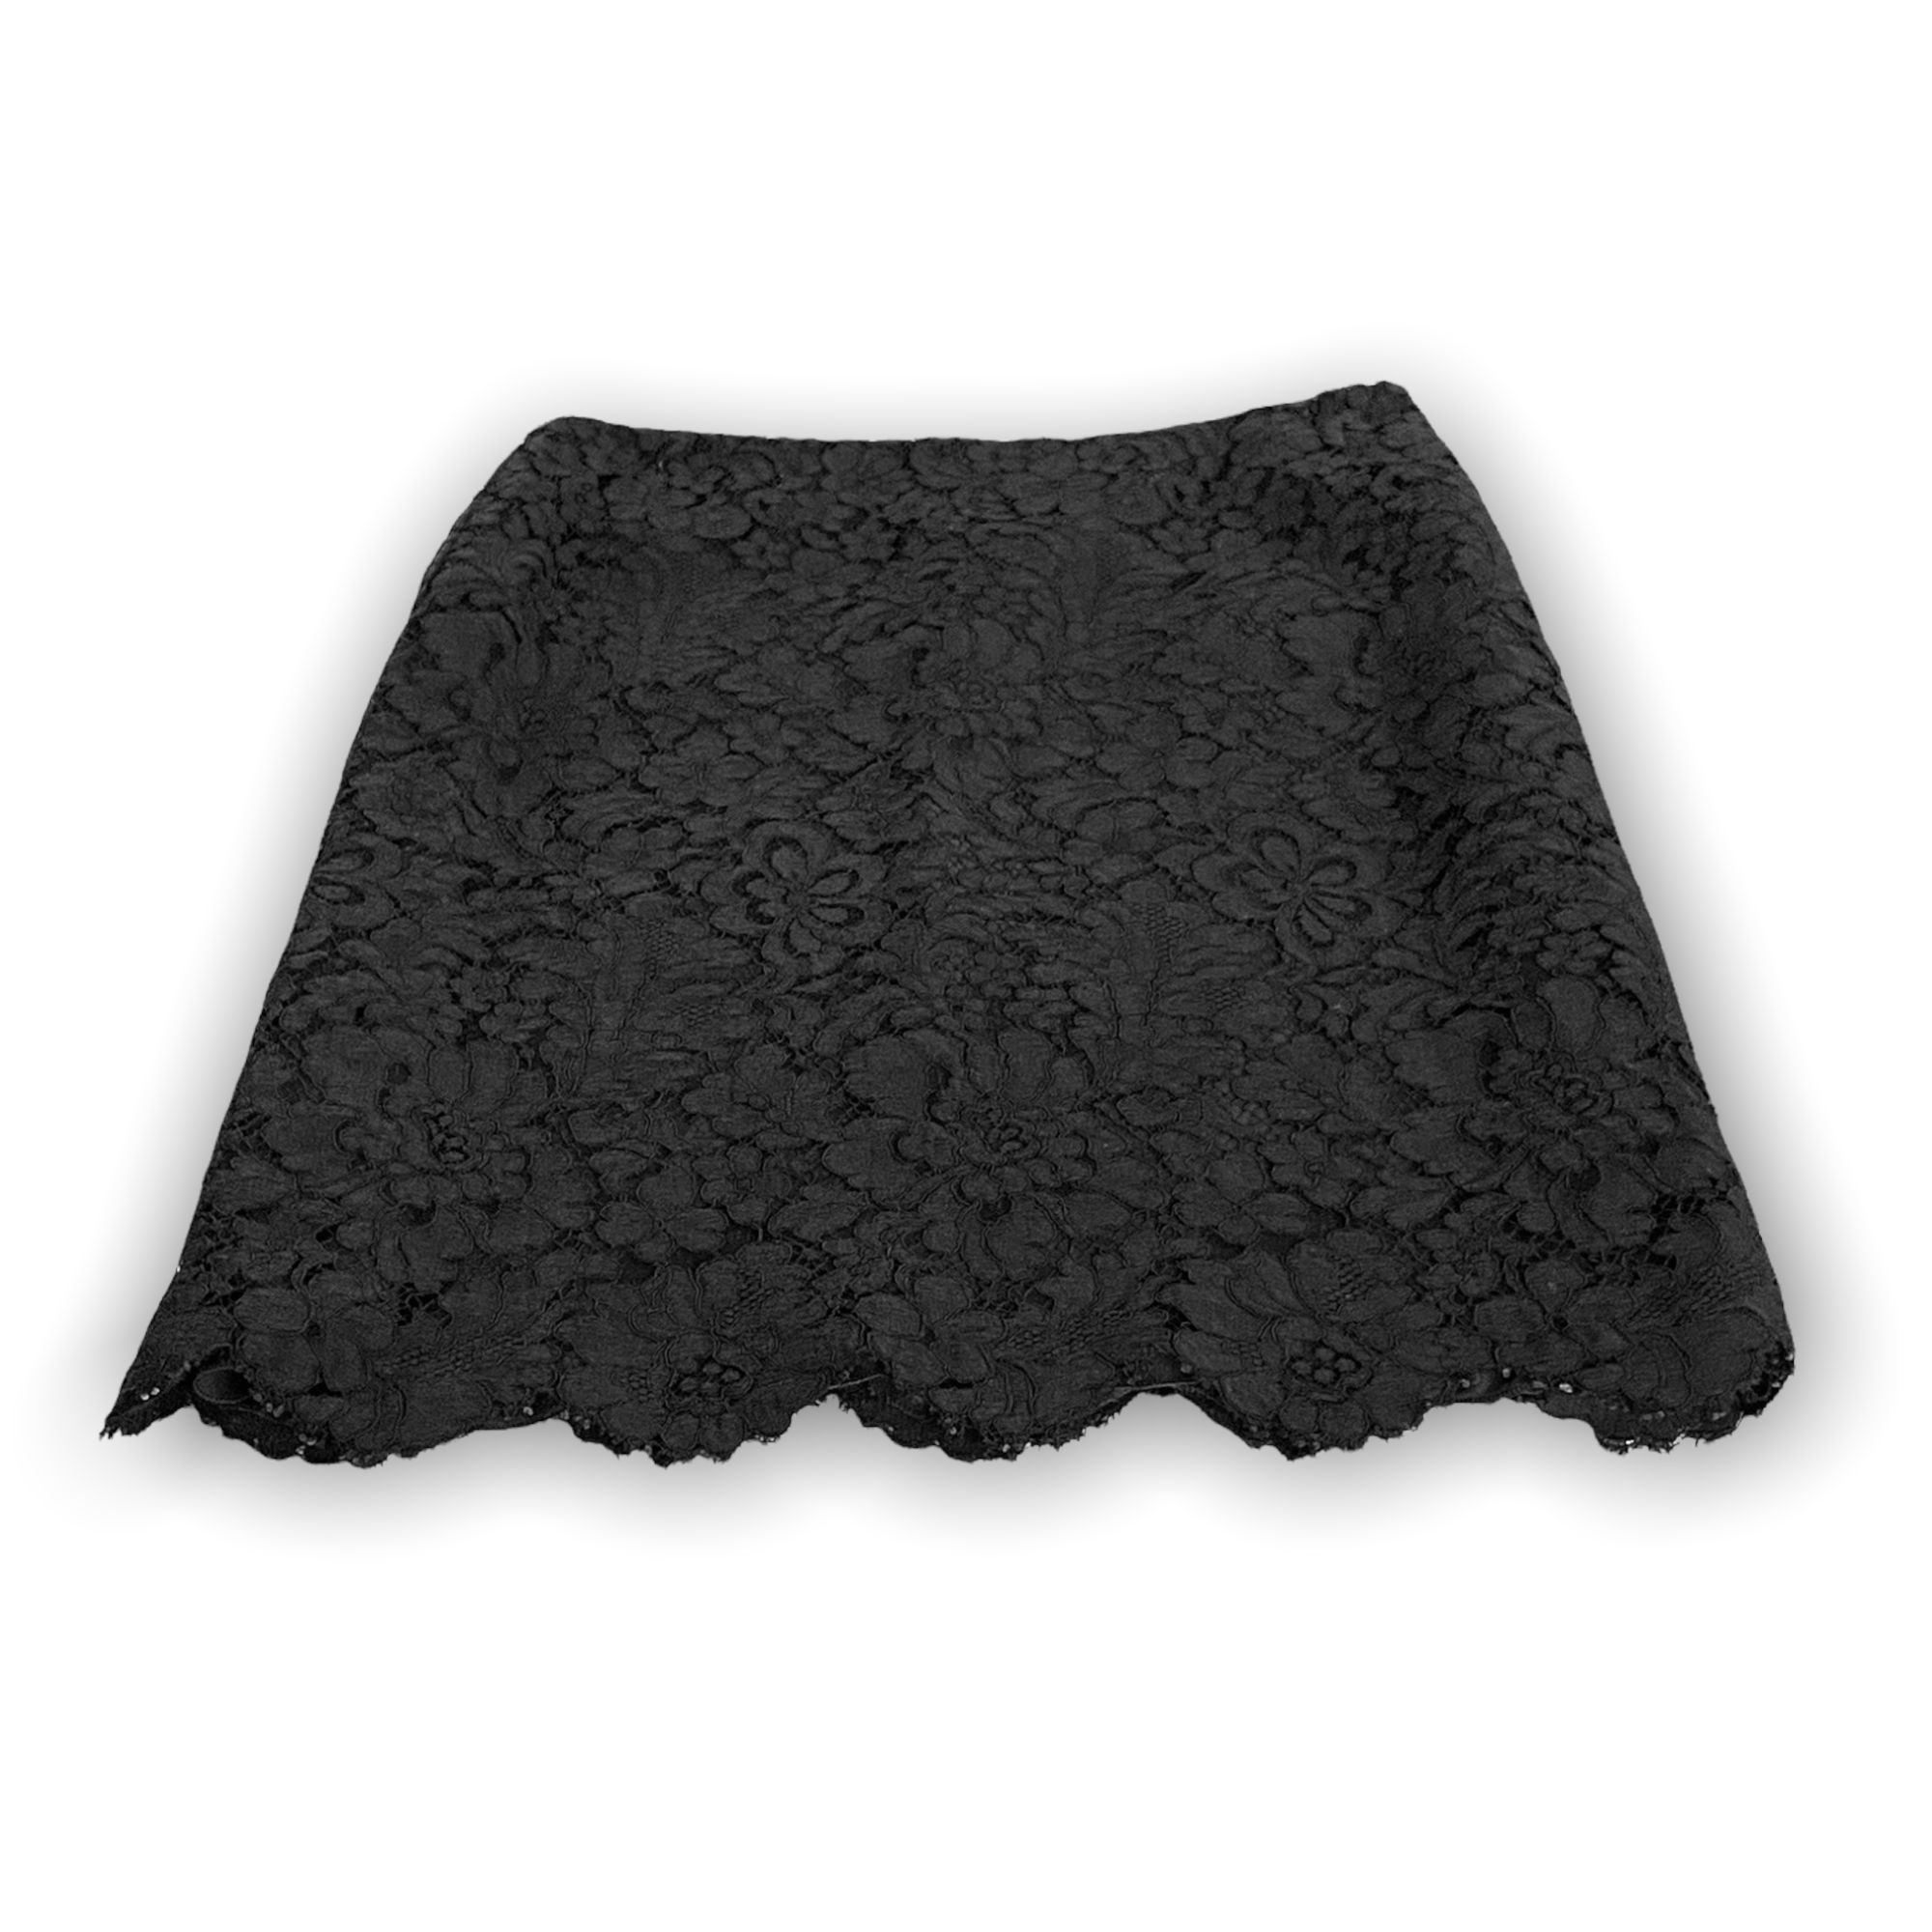 VINTAGE CHANEL Black Lace Midi-Skirt |Size: 38|